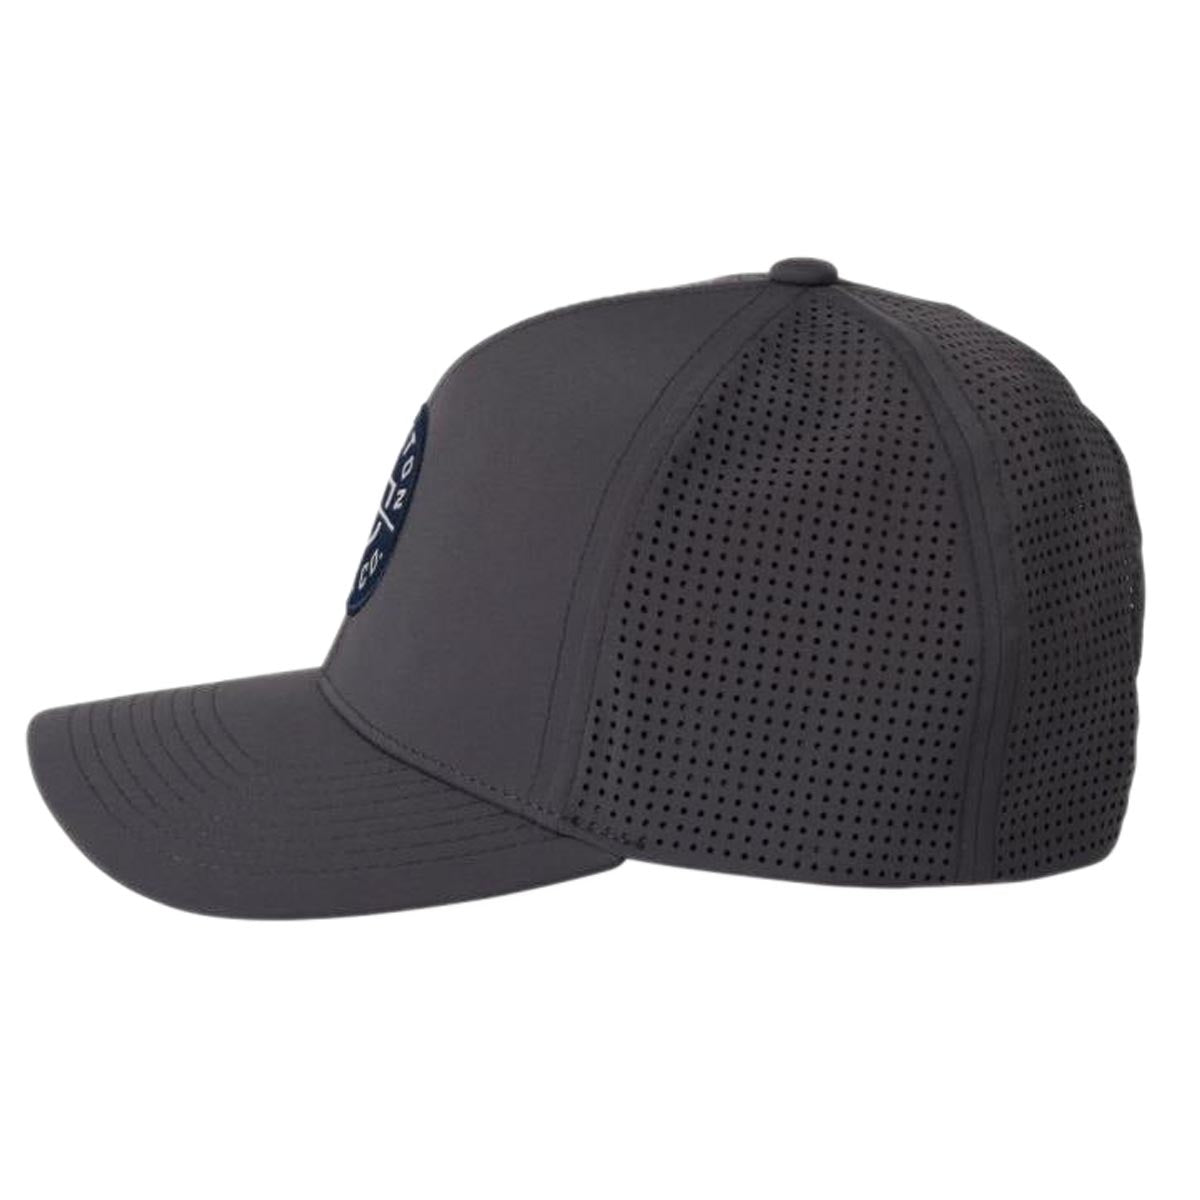 Brixton Crest X Mp Snapback Hat - Charcoal/Navy image 3